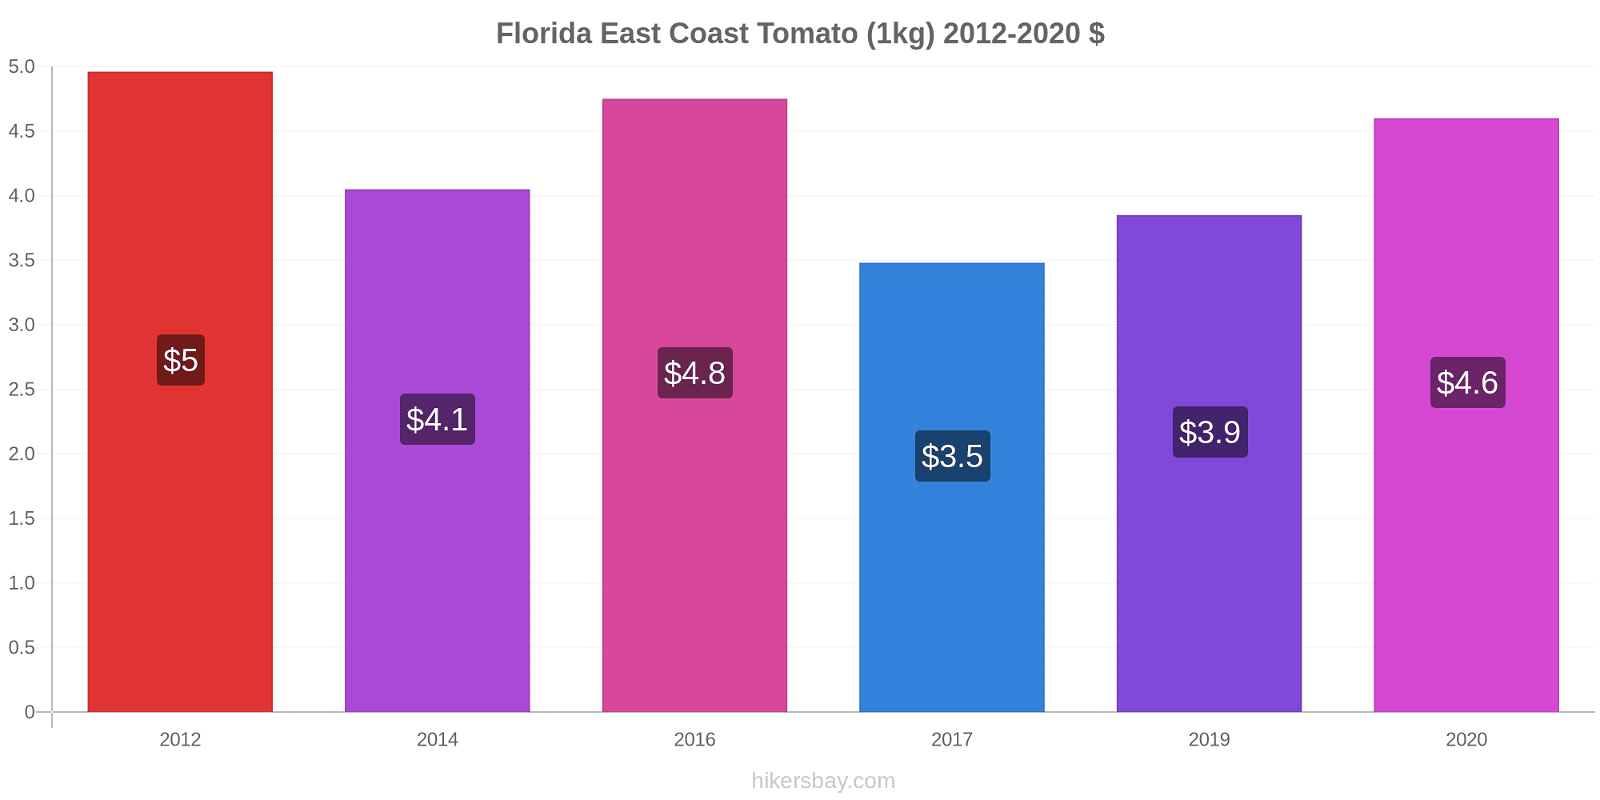 Florida East Coast price changes Tomato (1kg) hikersbay.com